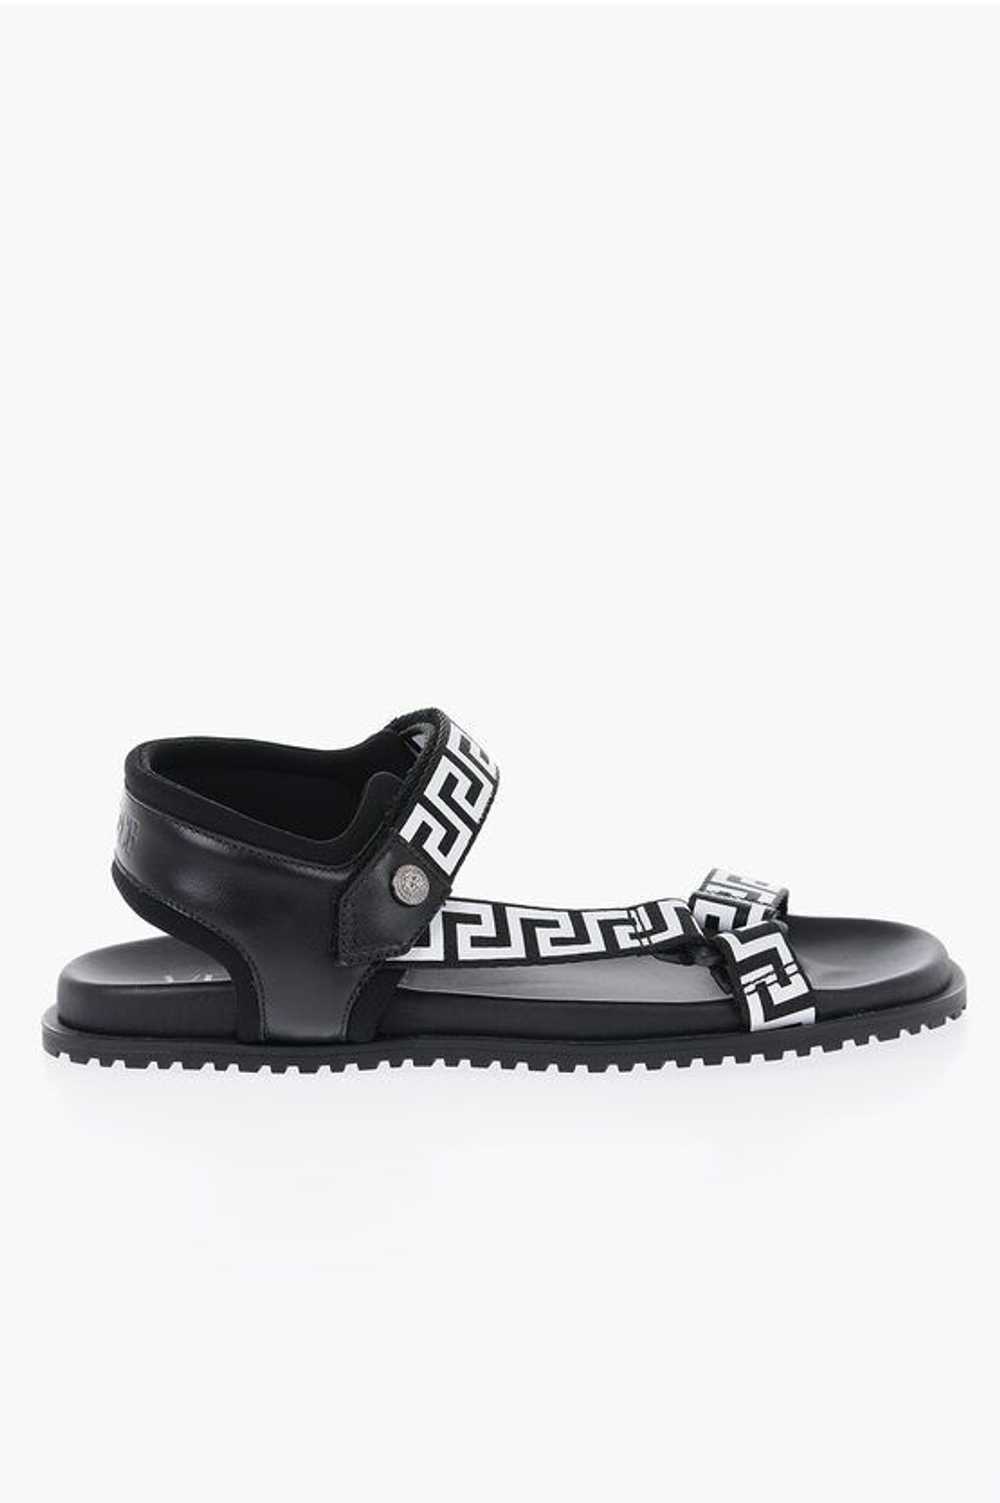 Versace og1mm0524 Fabric Print Sandals in Black - image 1